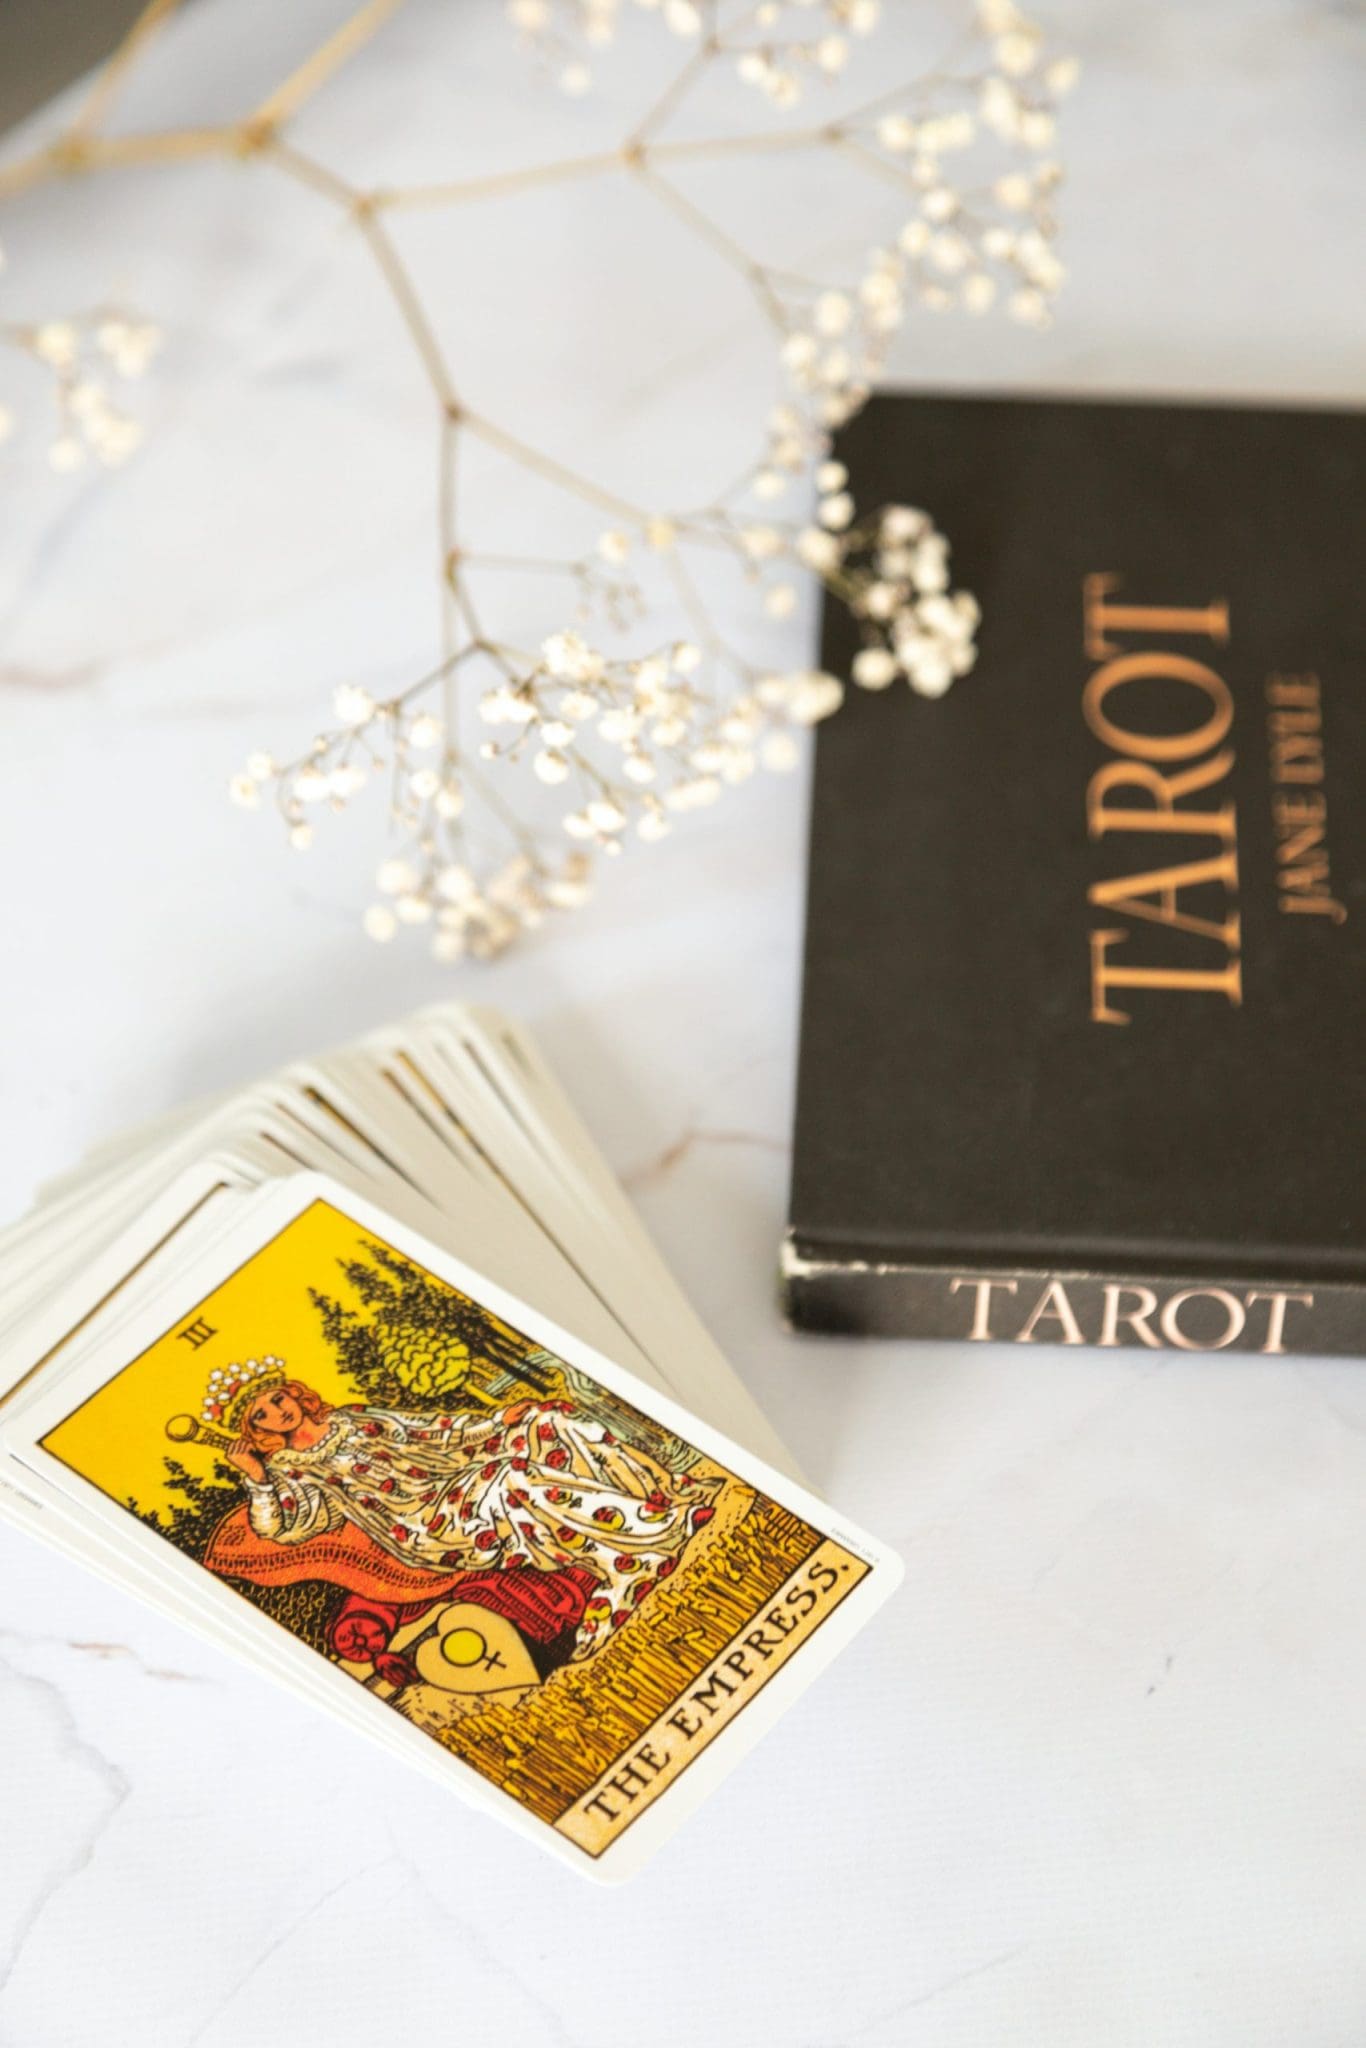 Tarot cards at a wedding table